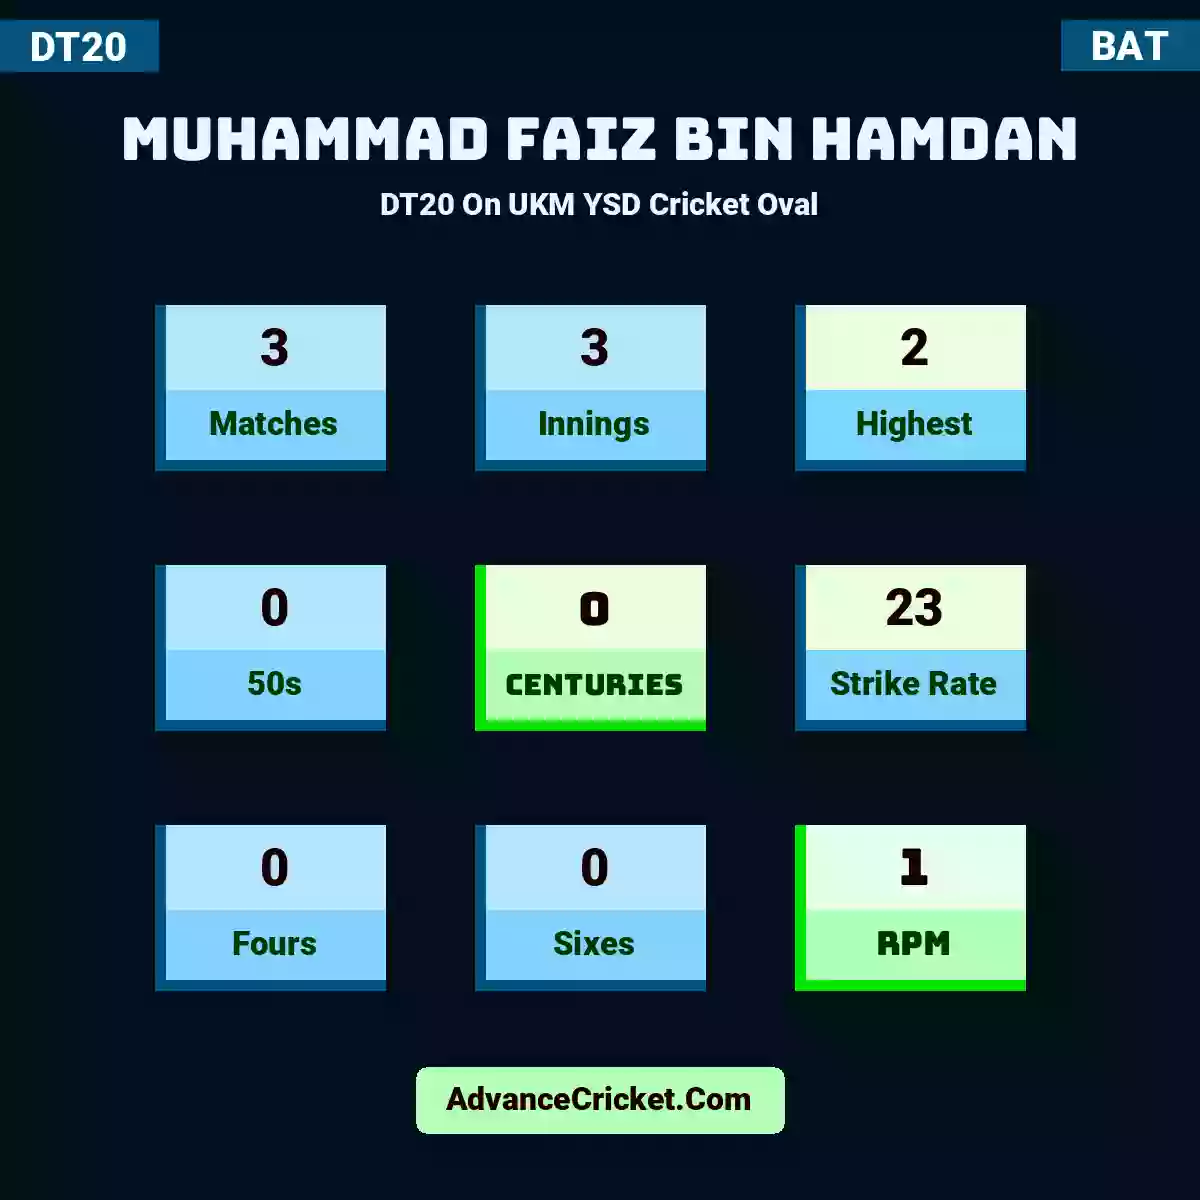 Muhammad Faiz Bin Hamdan DT20  On UKM YSD Cricket Oval, Muhammad Faiz Bin Hamdan played 3 matches, scored 2 runs as highest, 0 half-centuries, and 0 centuries, with a strike rate of 23. M.Faiz.Bin.Hamdan hit 0 fours and 0 sixes, with an RPM of 1.